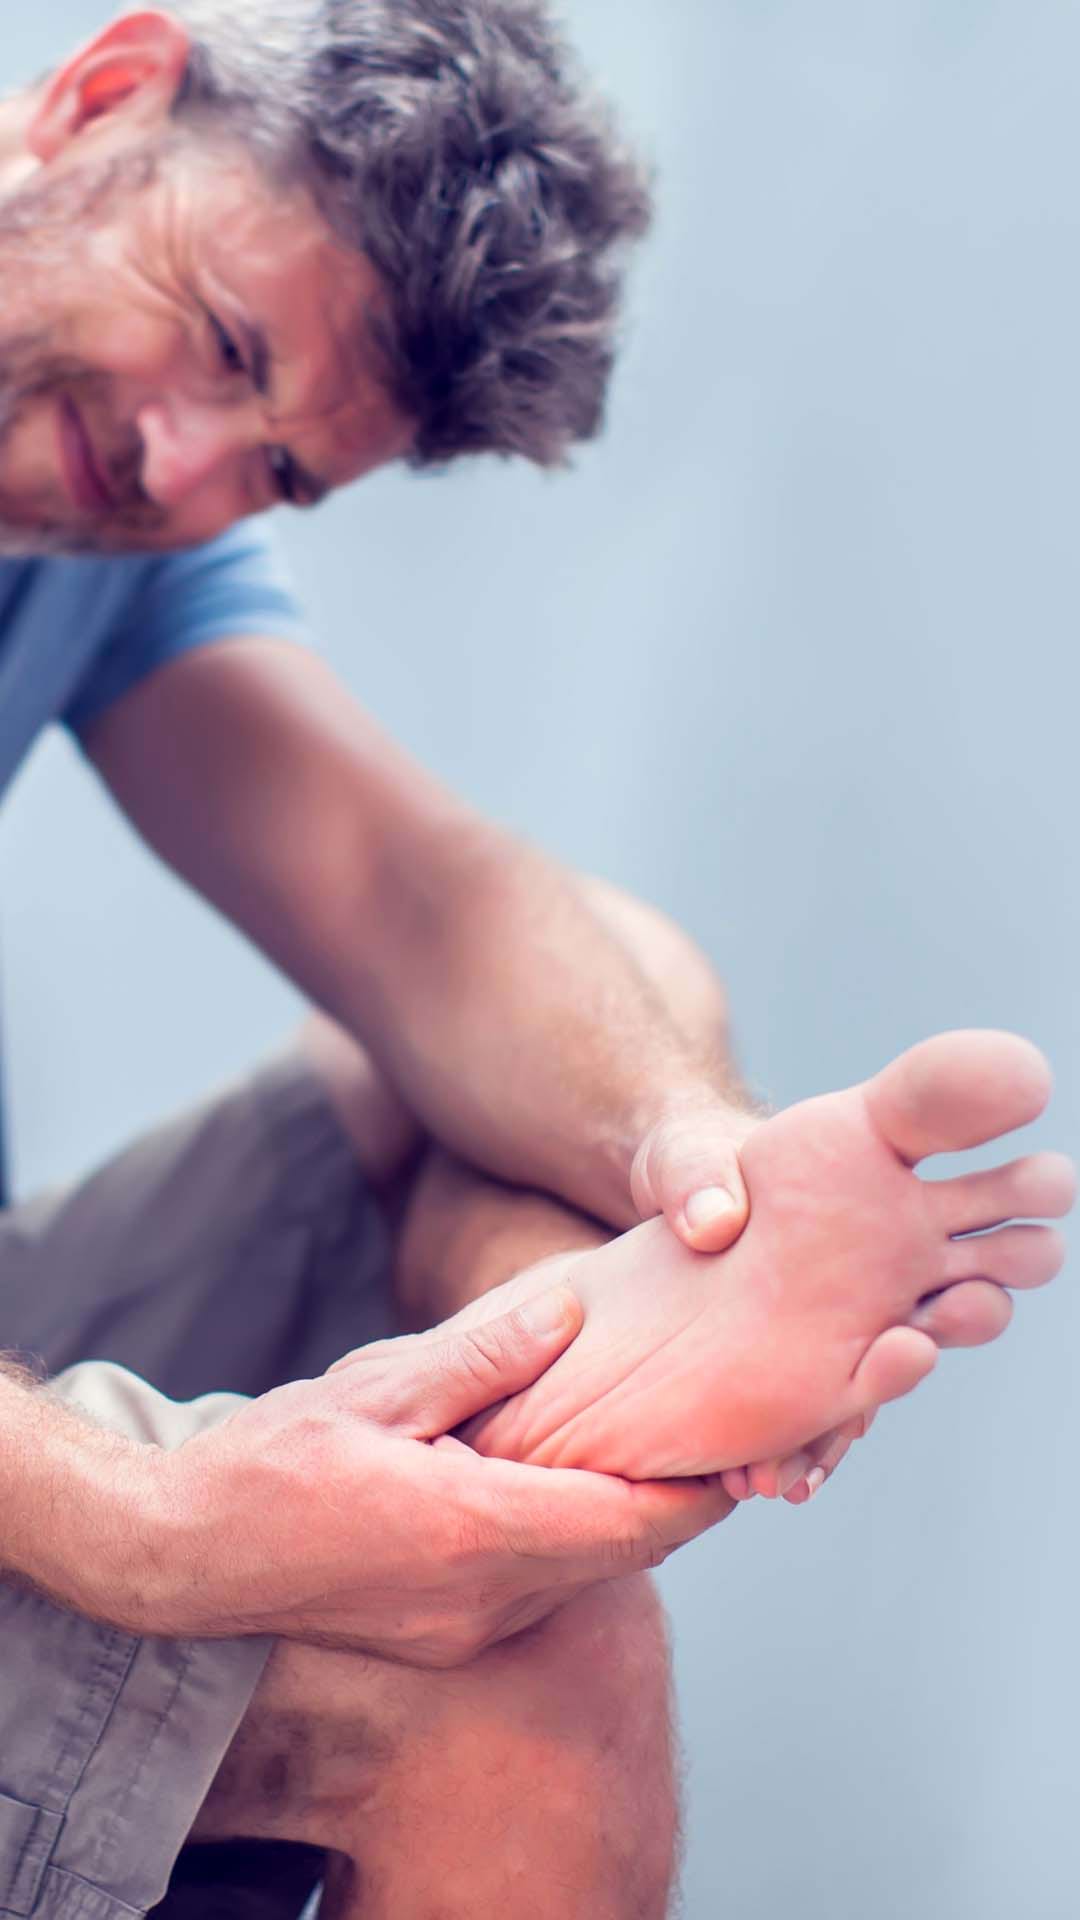 Durere la glezna de sub genunchi. Durere sub genunchi și gleznă | Forumul Medical ROmedic